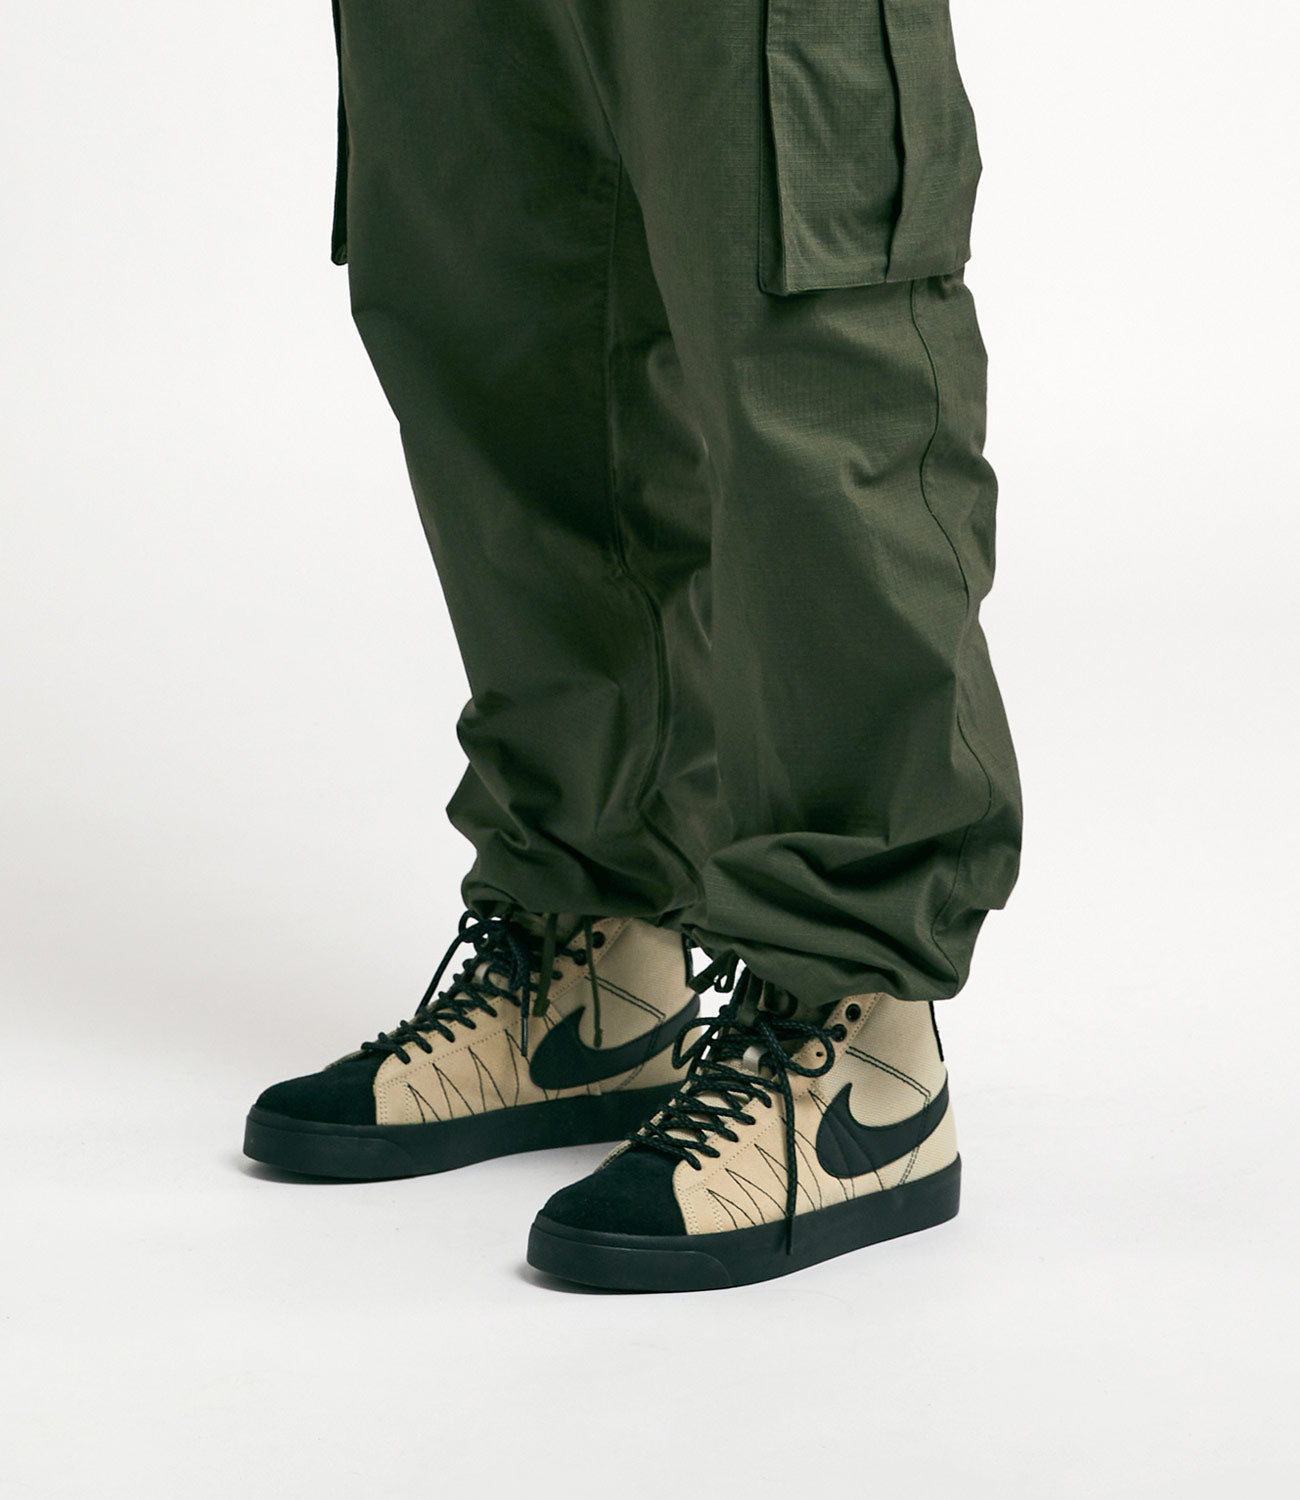 Fuera Aplastar partido Democrático Nike SB Blazer Mid Premium Shoes - Rattan / Black - Rattan - Safety Or |  Flatspot